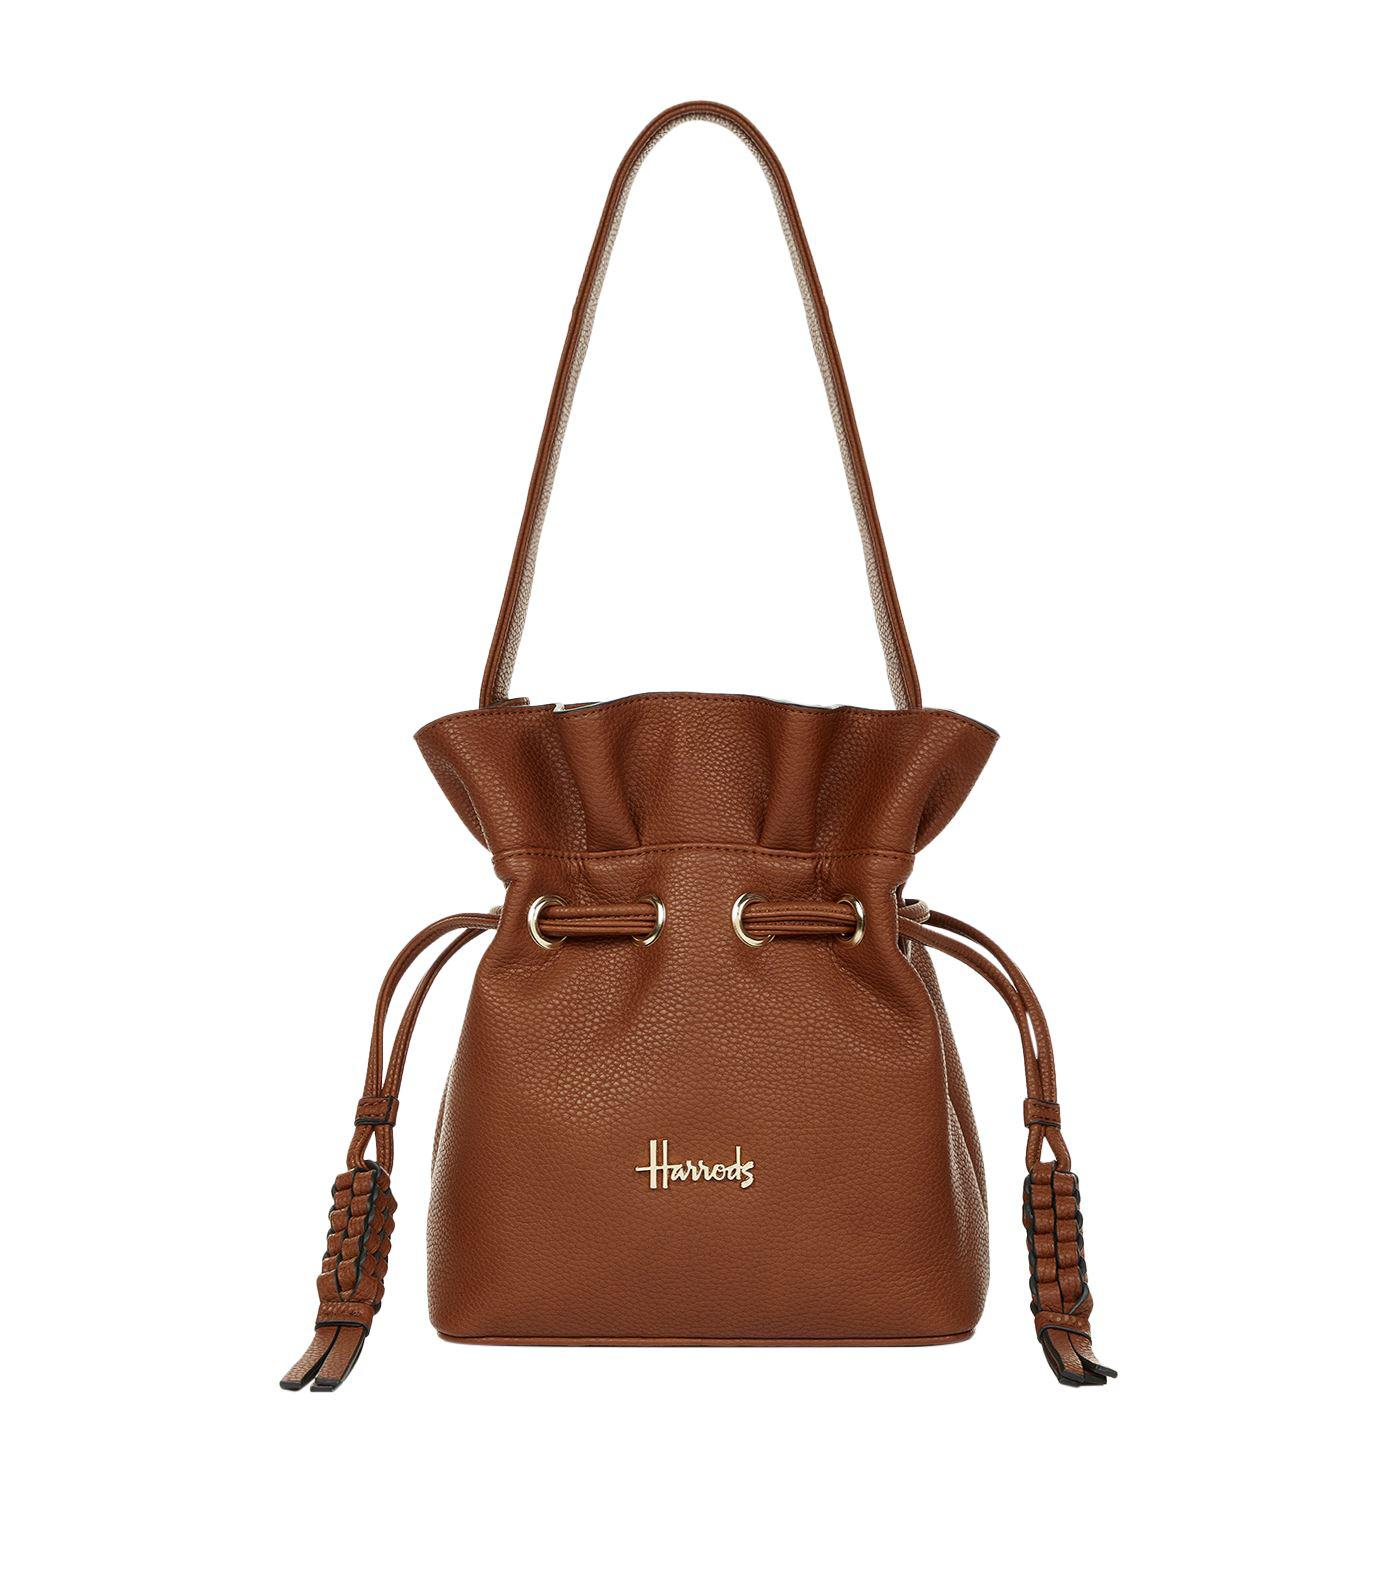 Harrods Agnes Mini Bag in Brown - Lyst